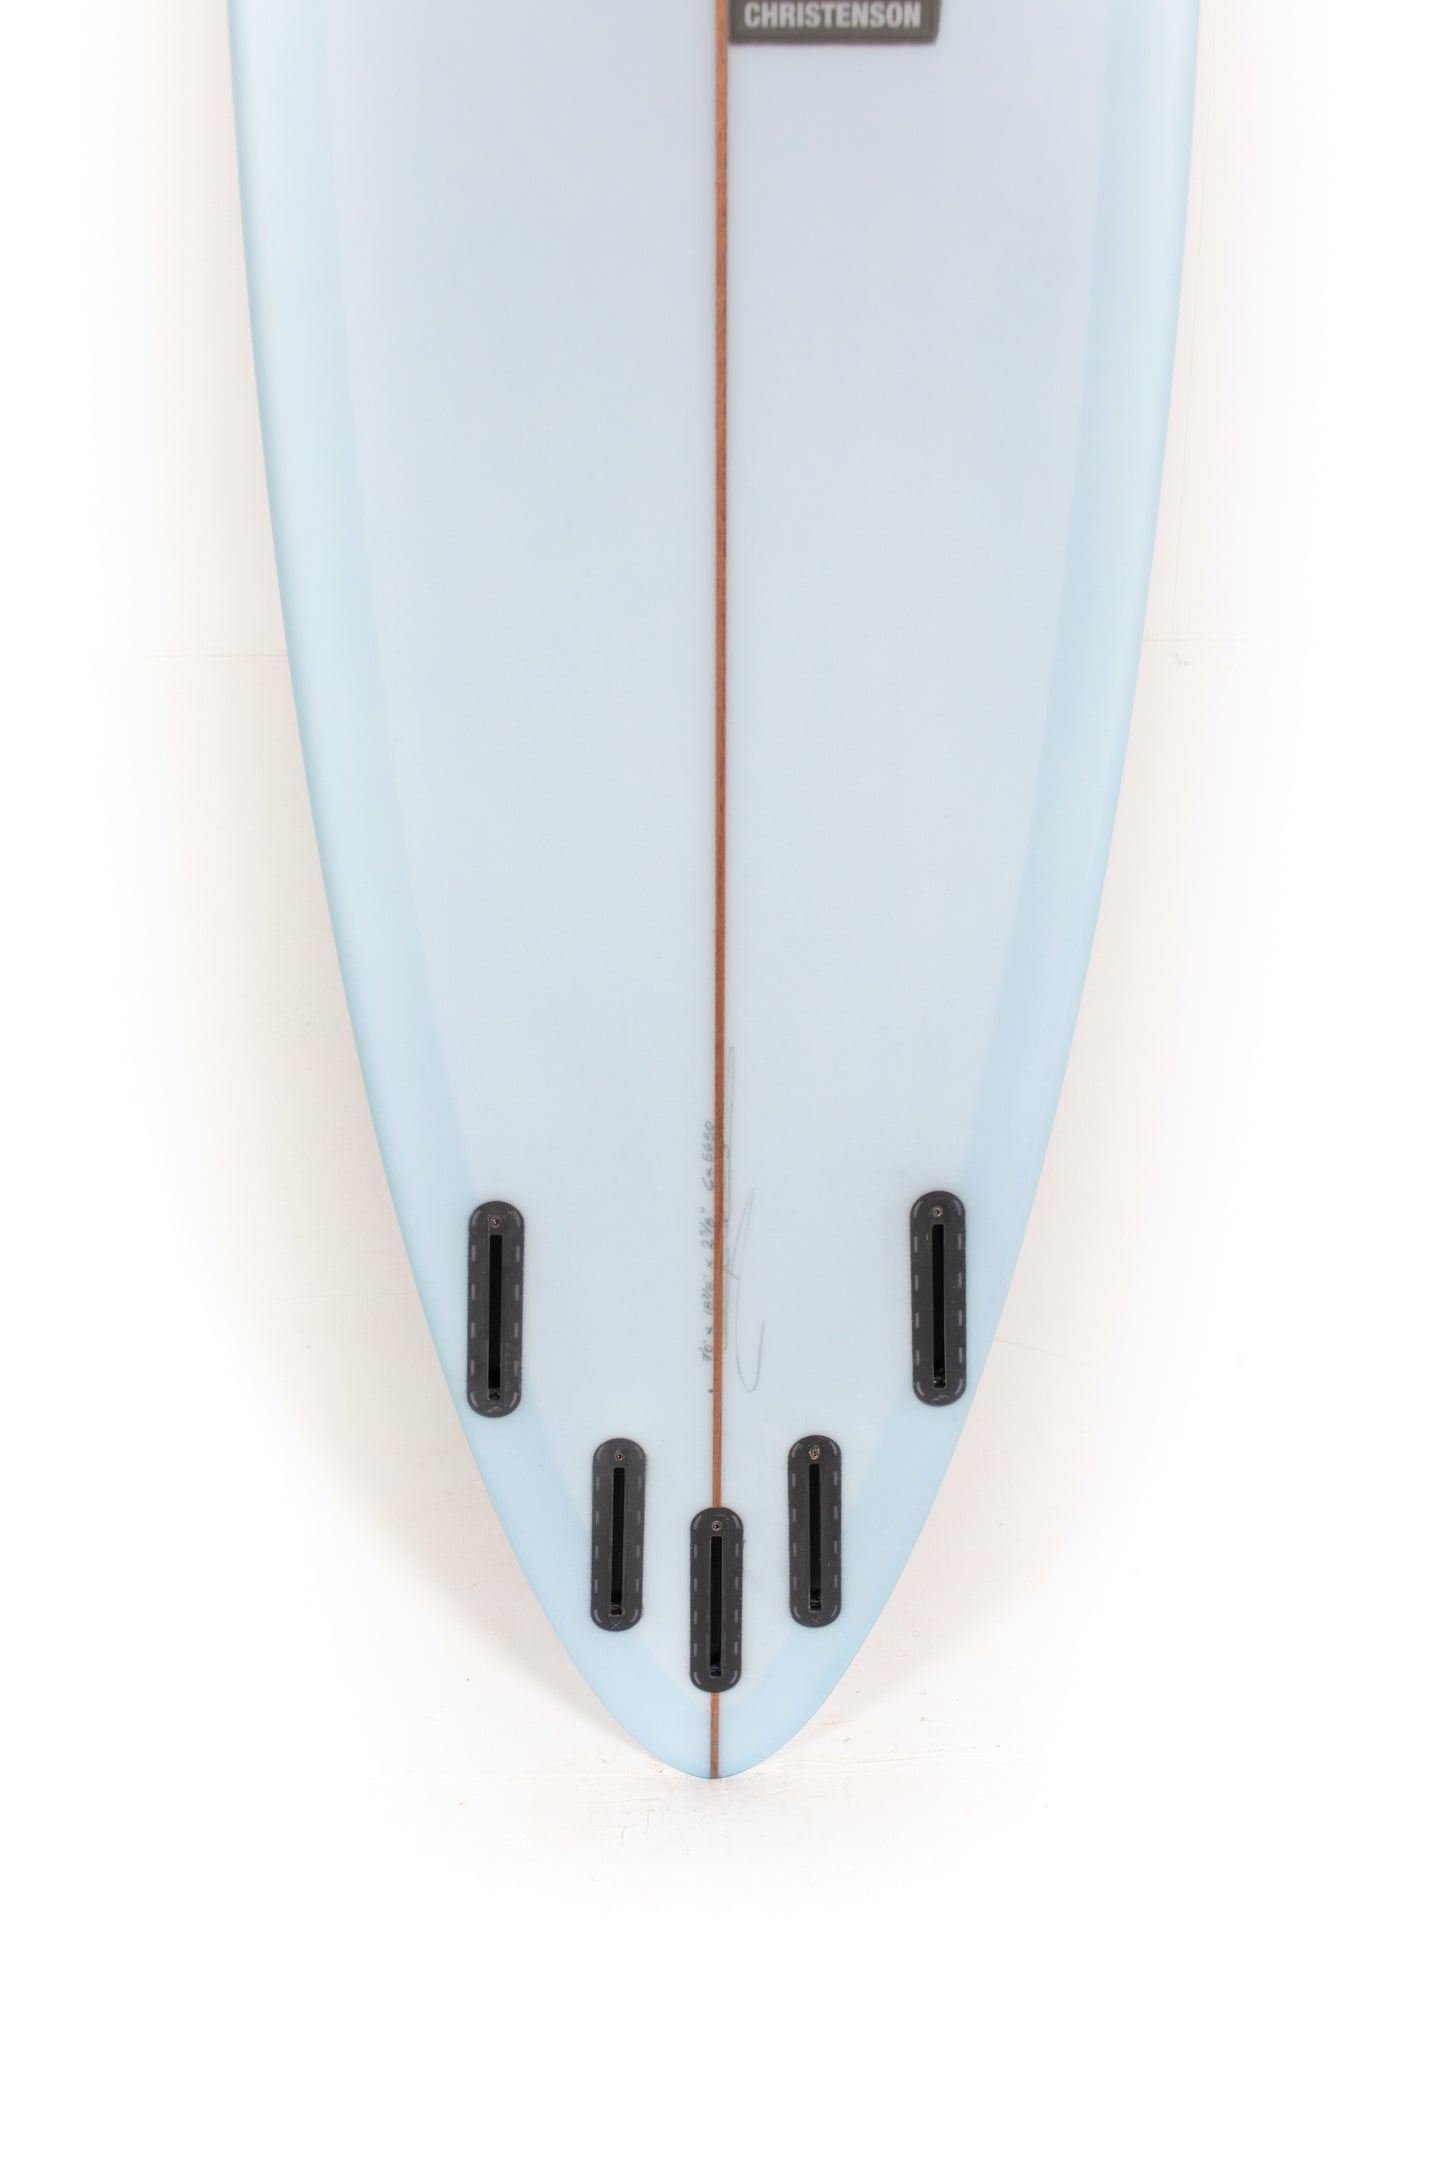 
                  
                    Christenson Surfboards - CARRERA - 7'0" x 1 8 7/8 x 2 5/8 - CX05650
                  
                